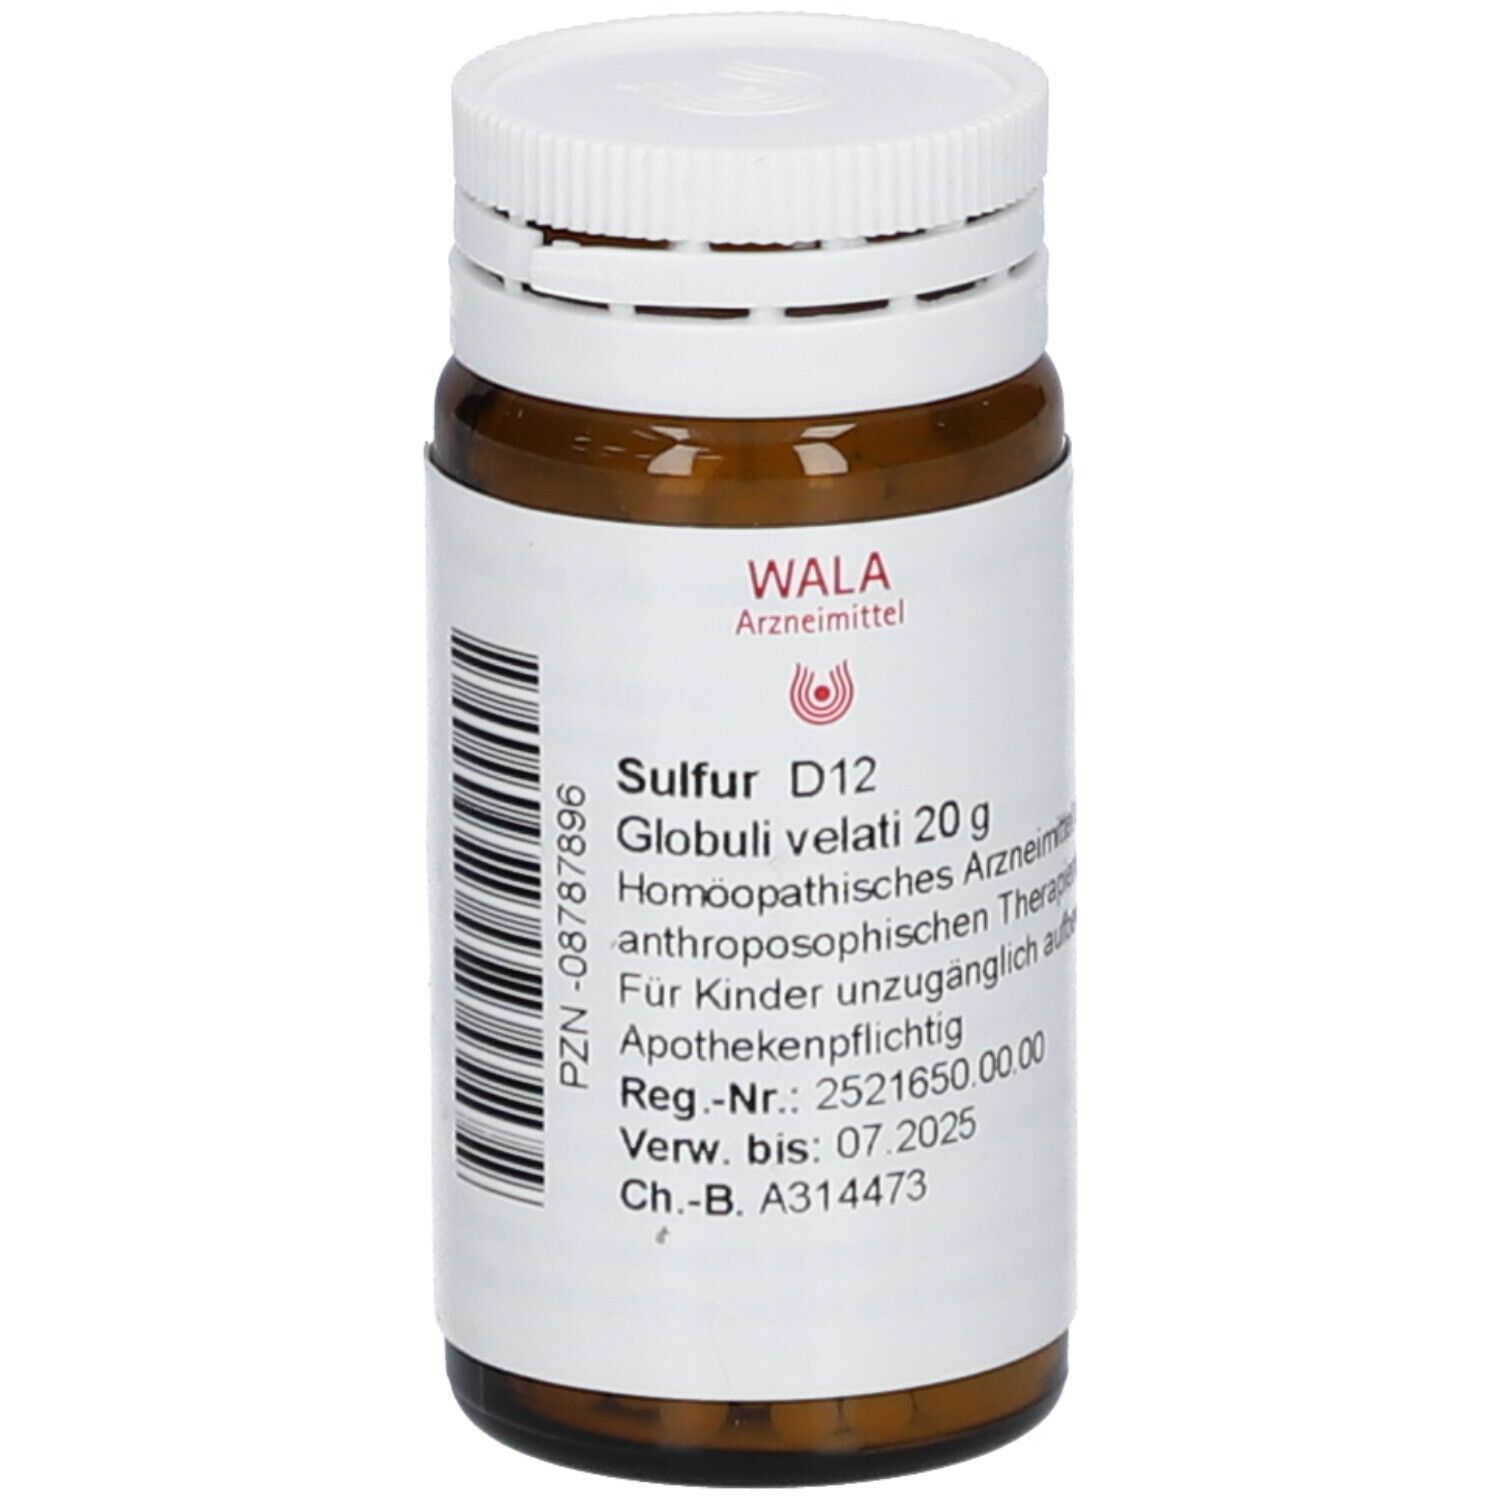 WALA® Sulfur D 12